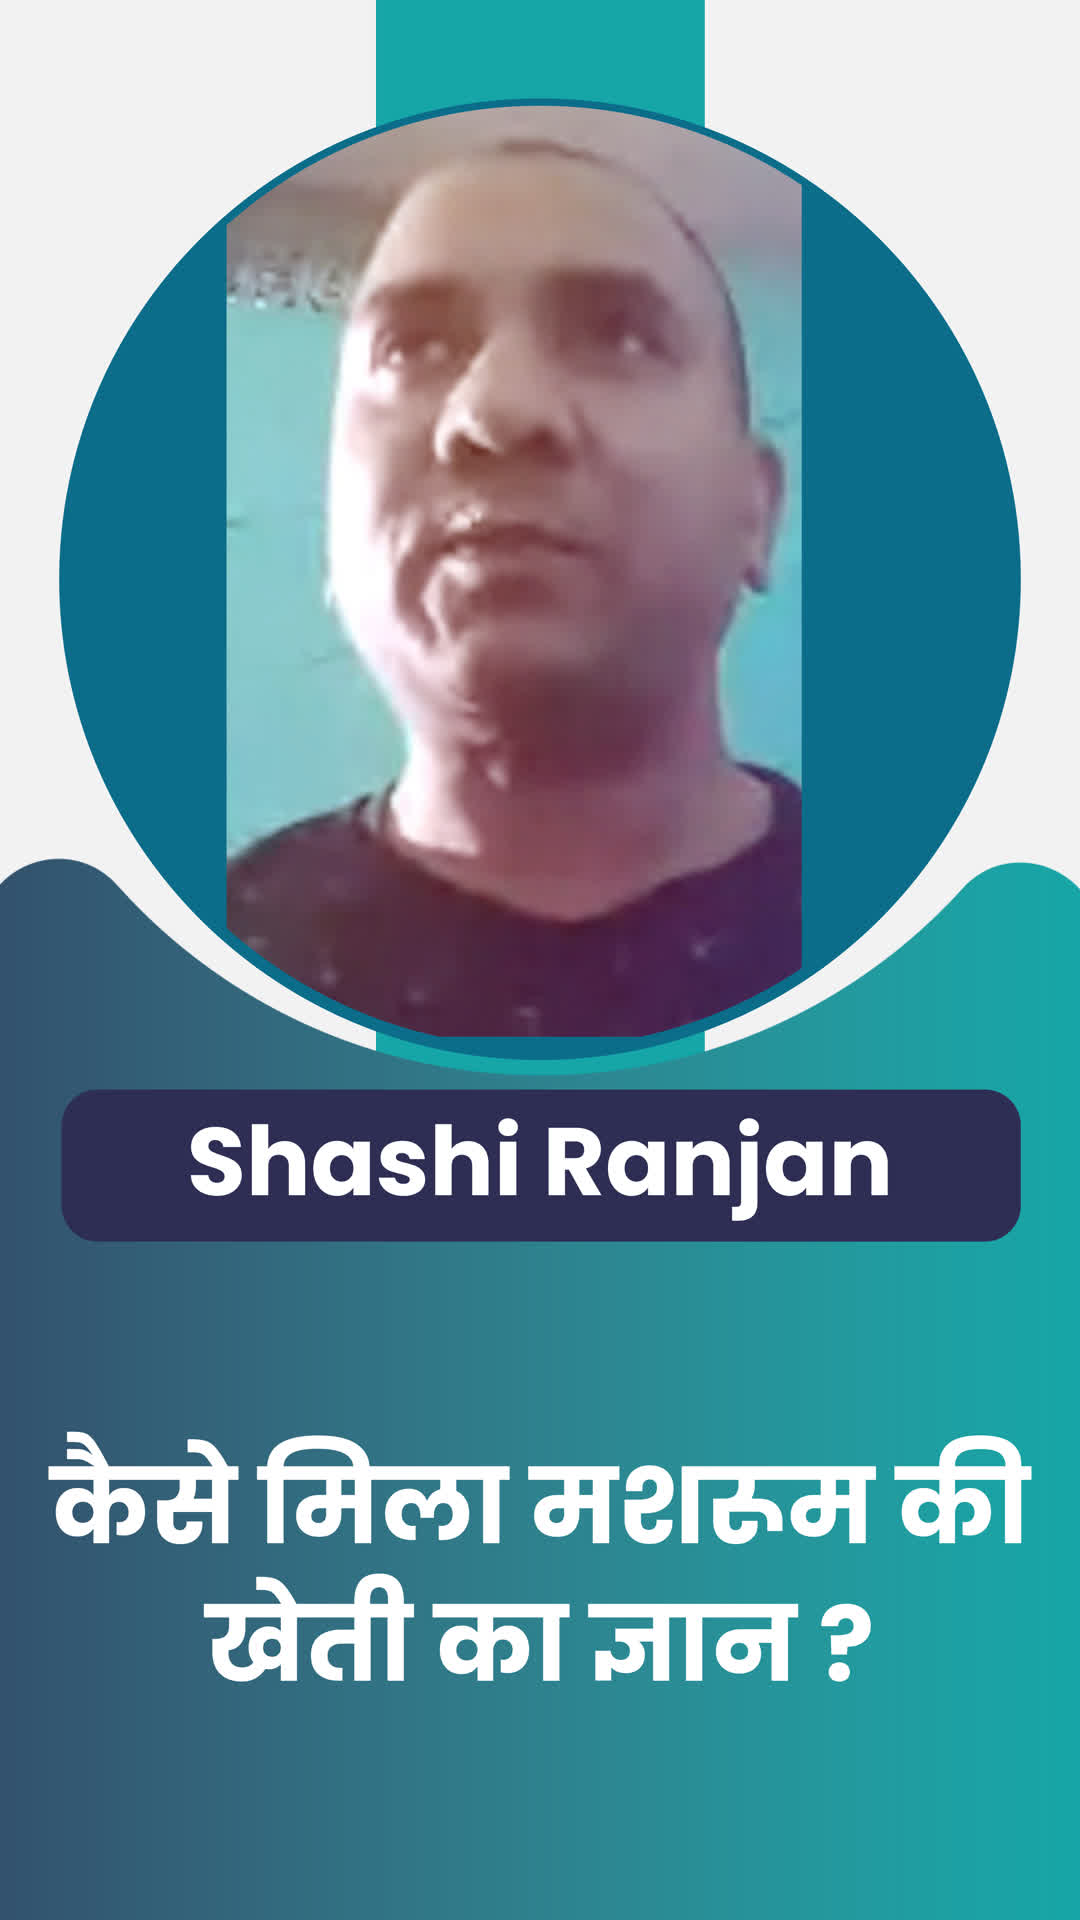 Shashi ranjan kumar's Honest Review of ffreedom app - Samastipur ,Bihar